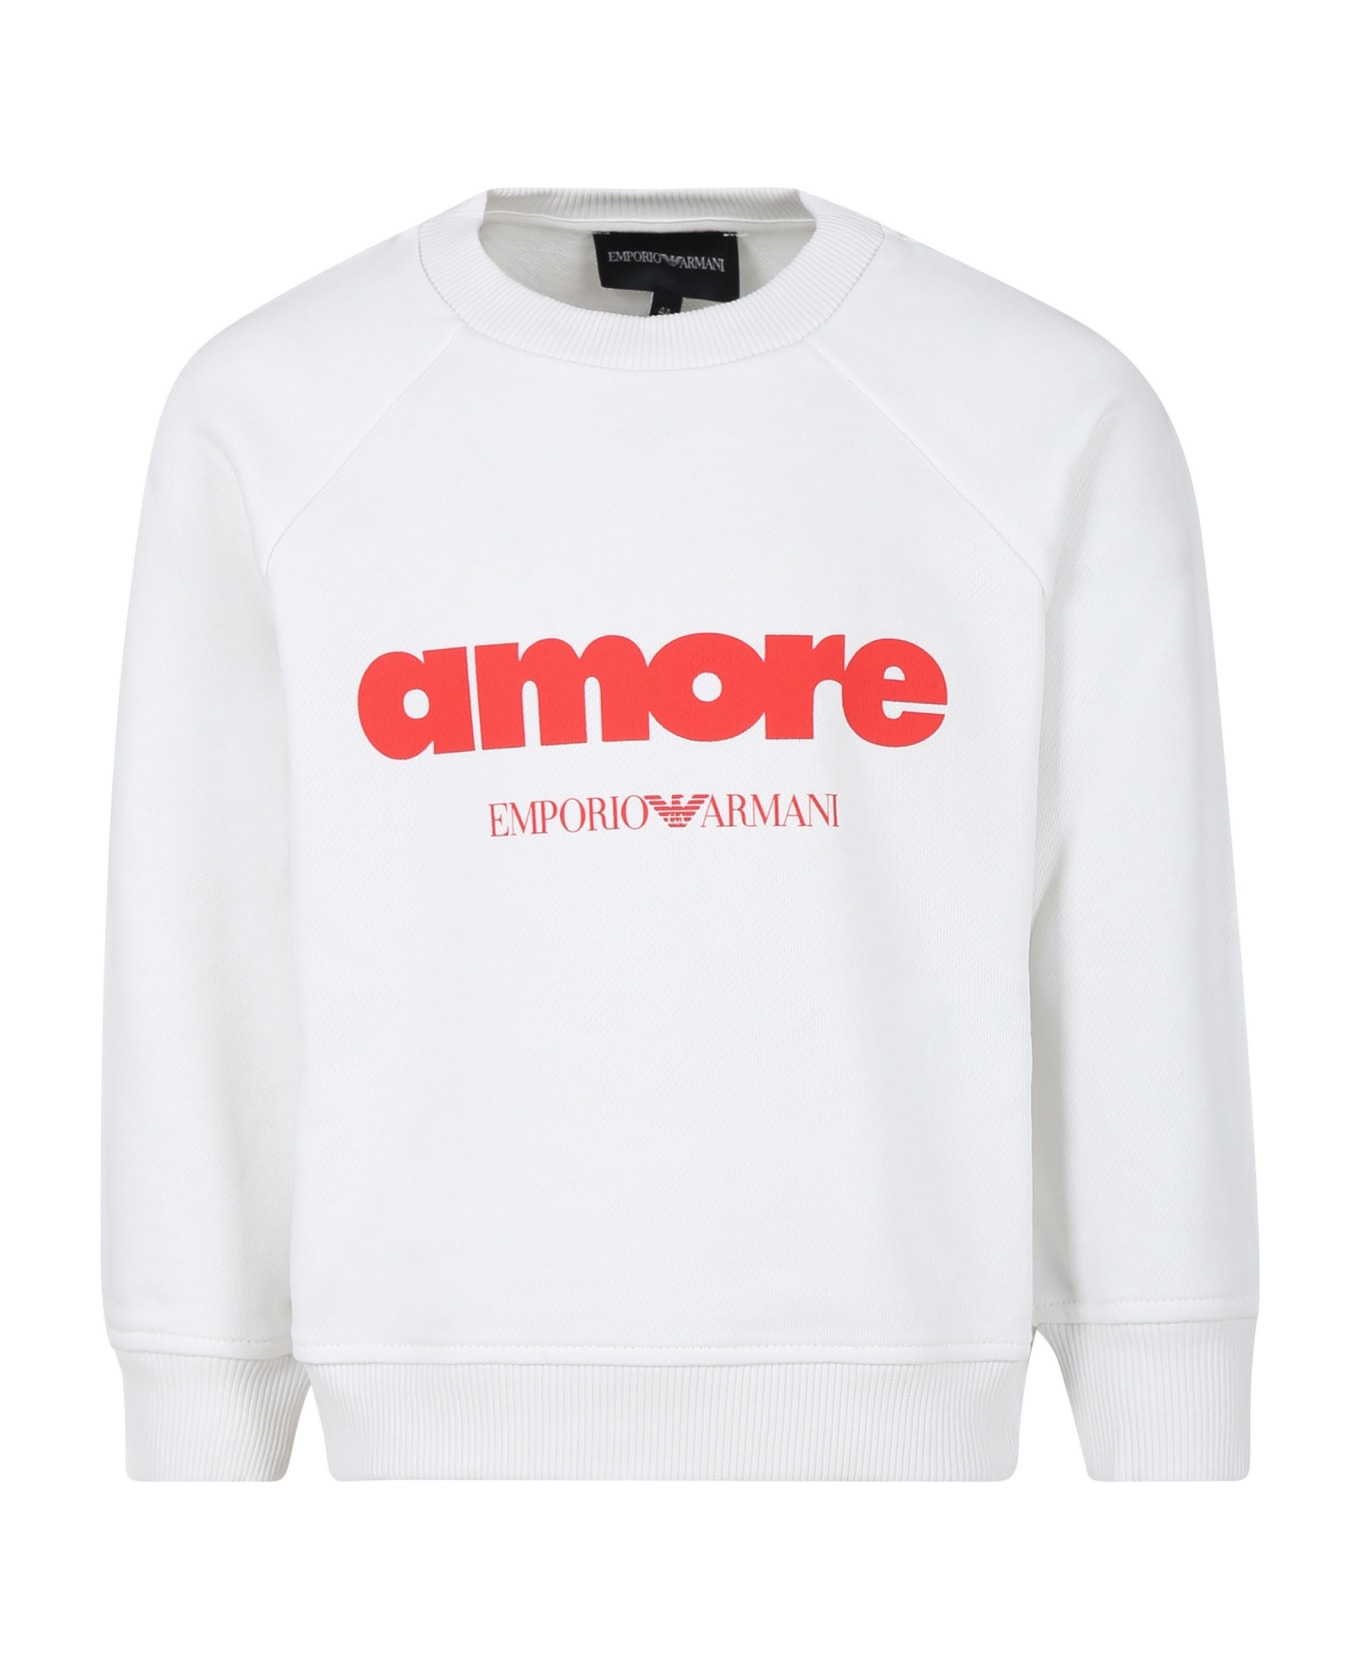 Emporio Armani Ivory Sweatshirt For Kids With Love Writing - Ivory